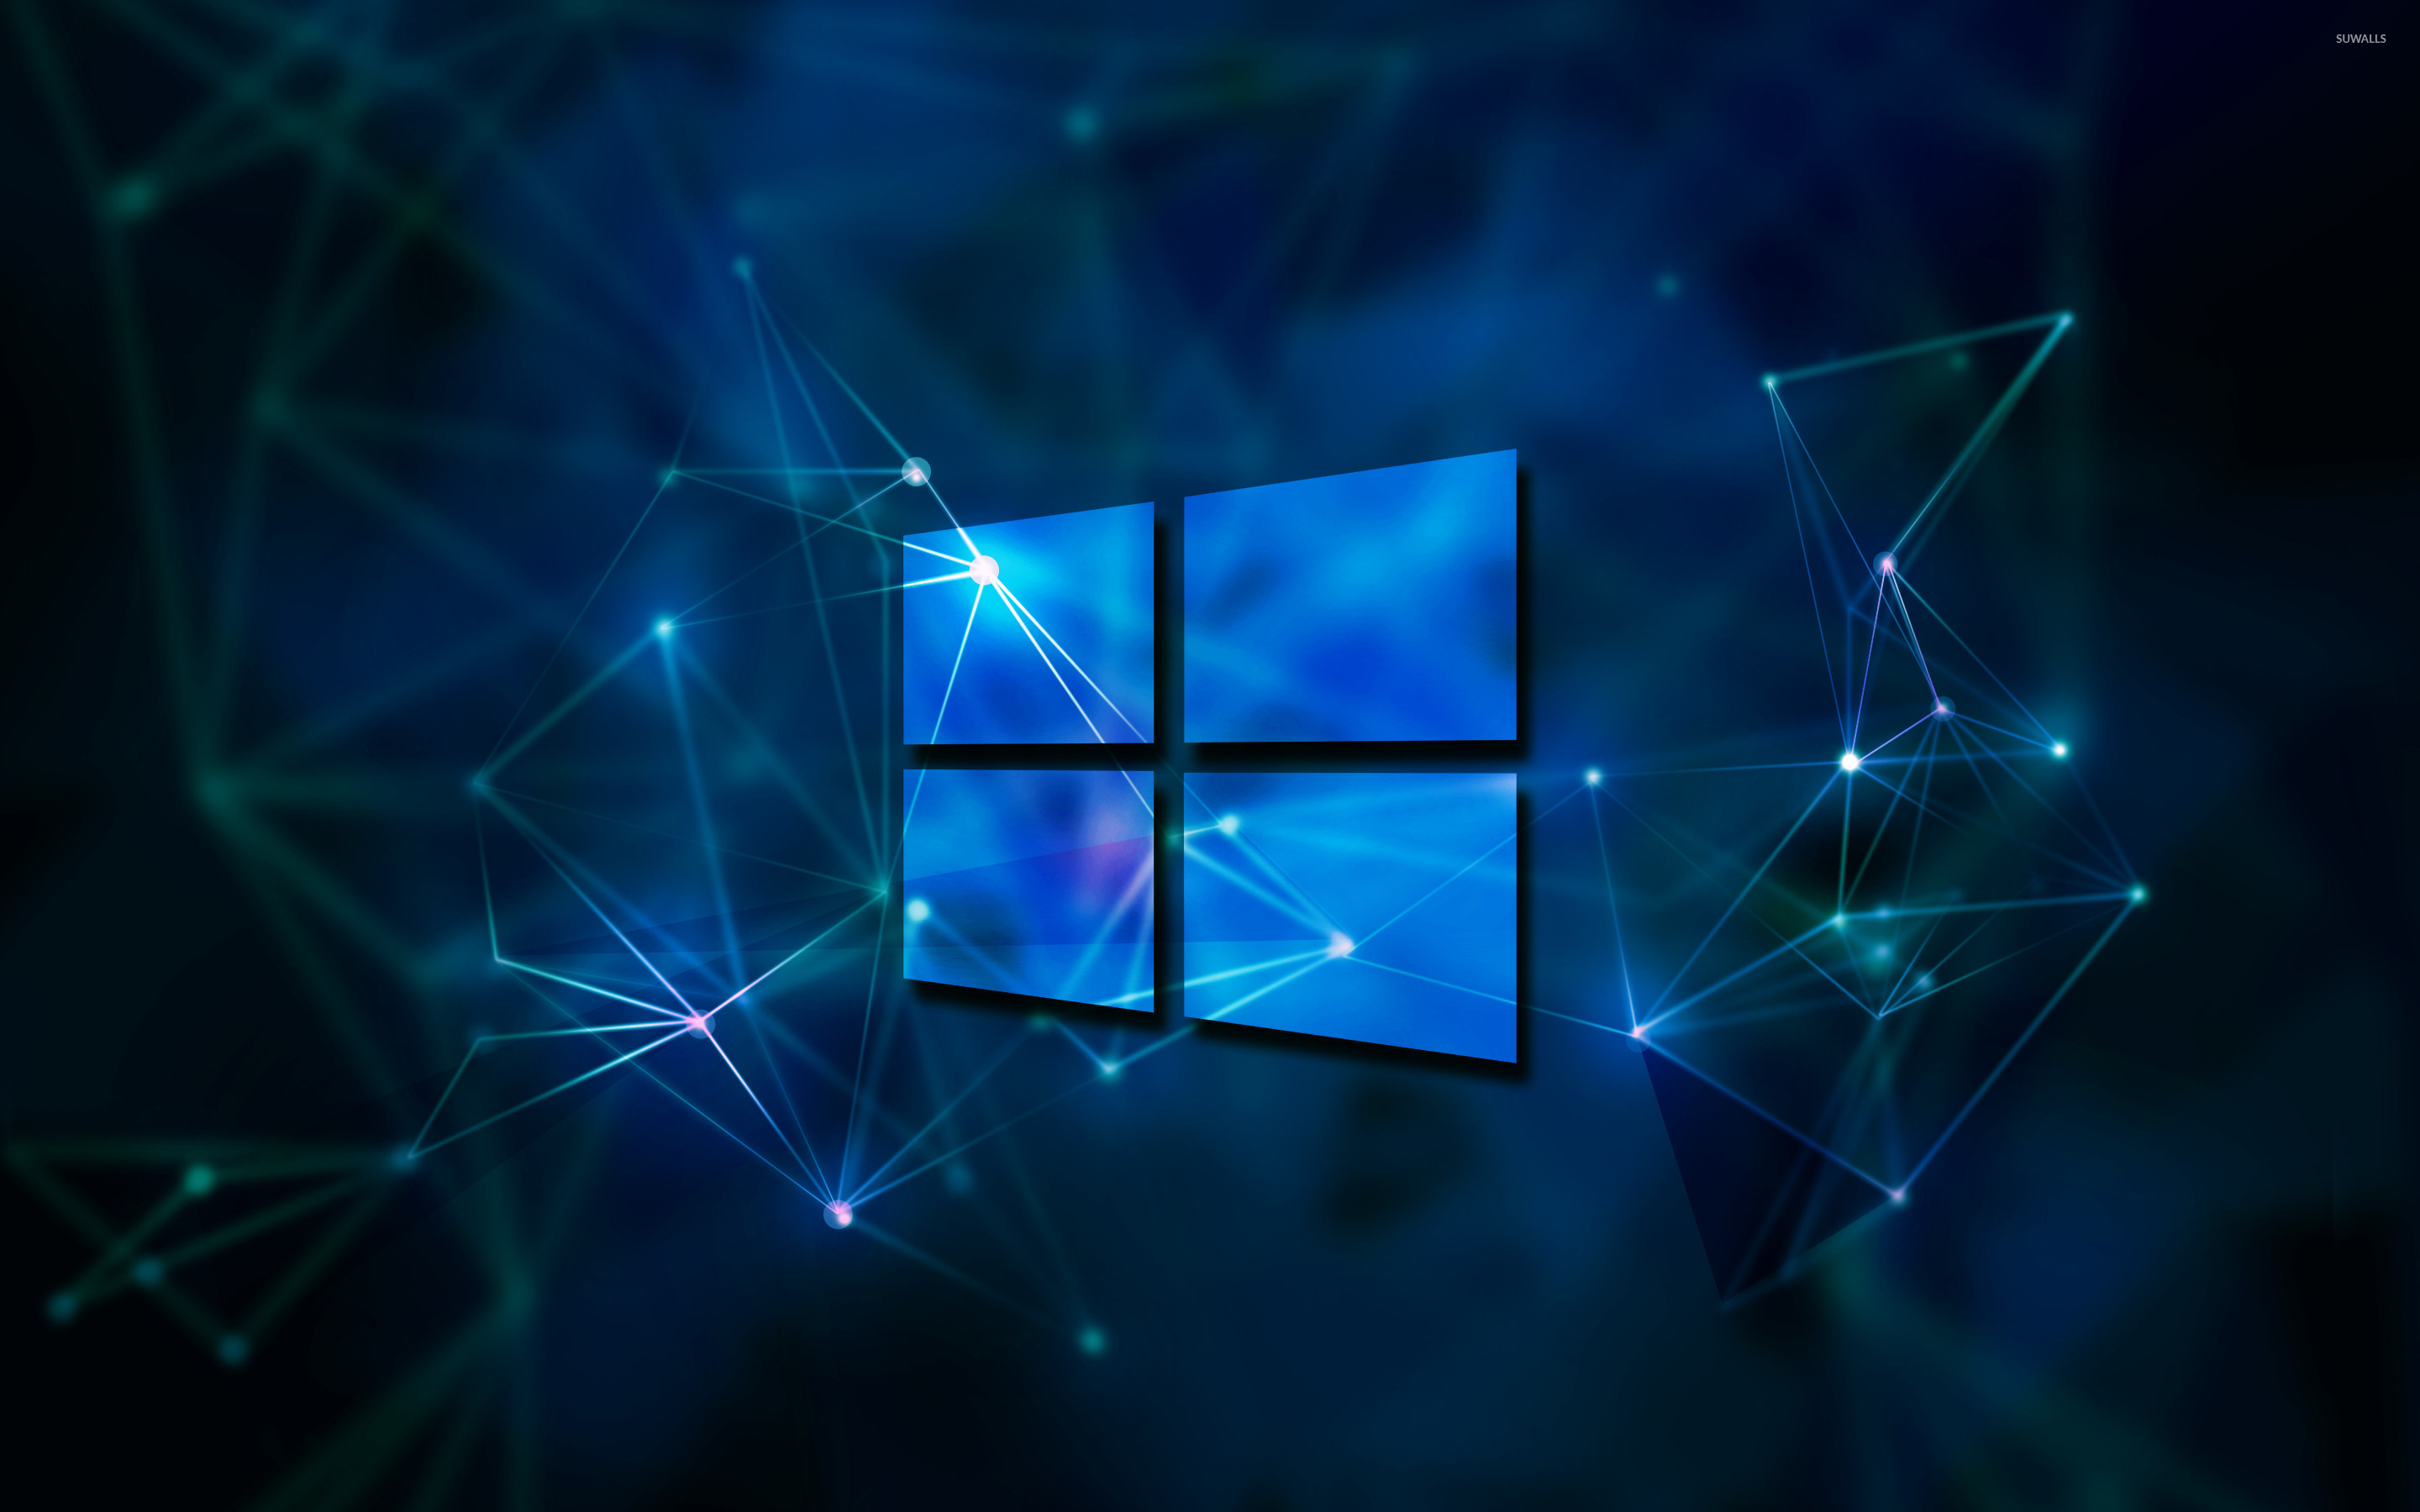 Windows 10 transparent logo on blue network wallpaper - Computer wallpapers  - #45580